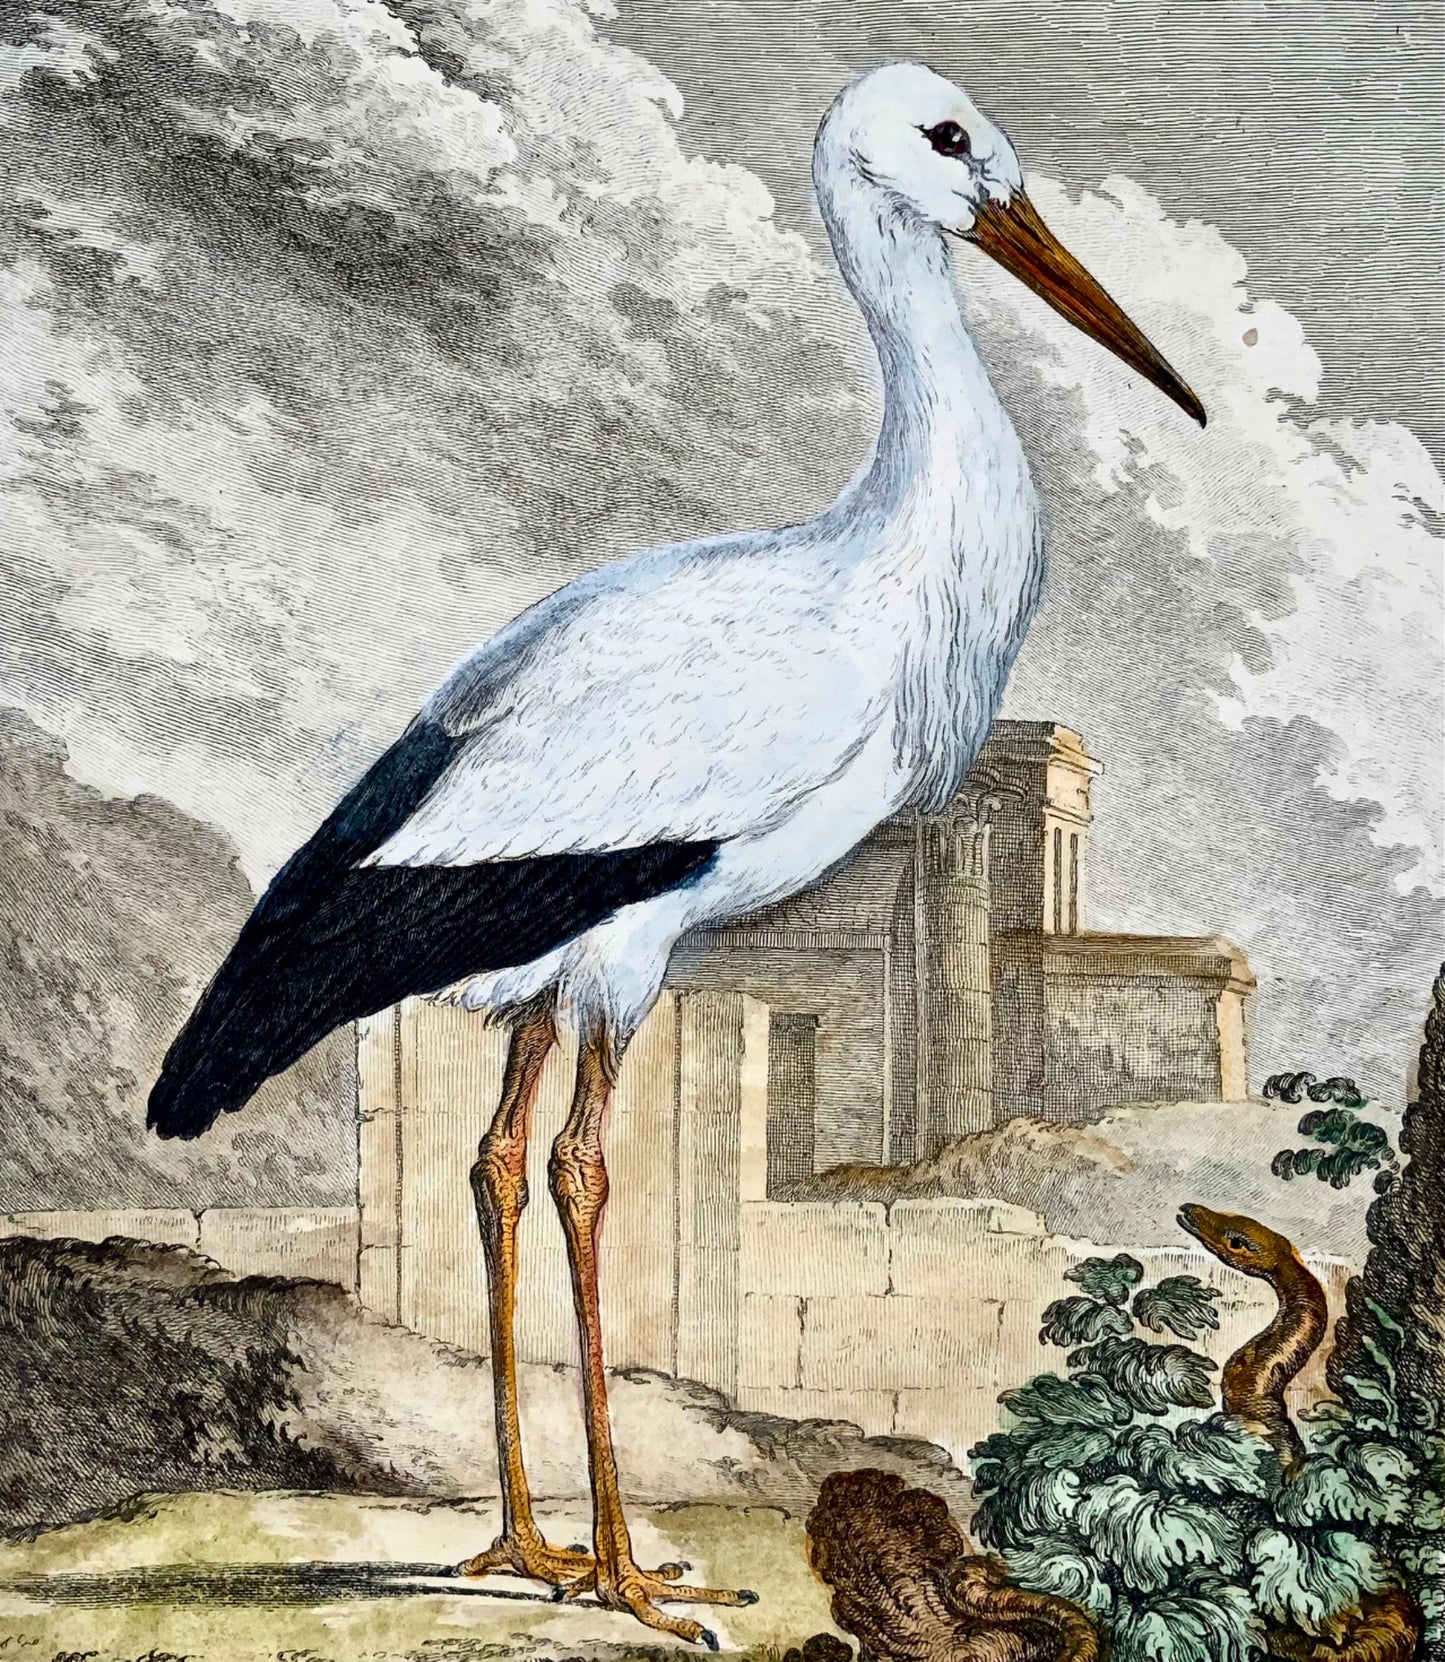 1779 de Seve - CIGOGNE Oiseau - Ornithologie - Gravure in-4 to Large Edn